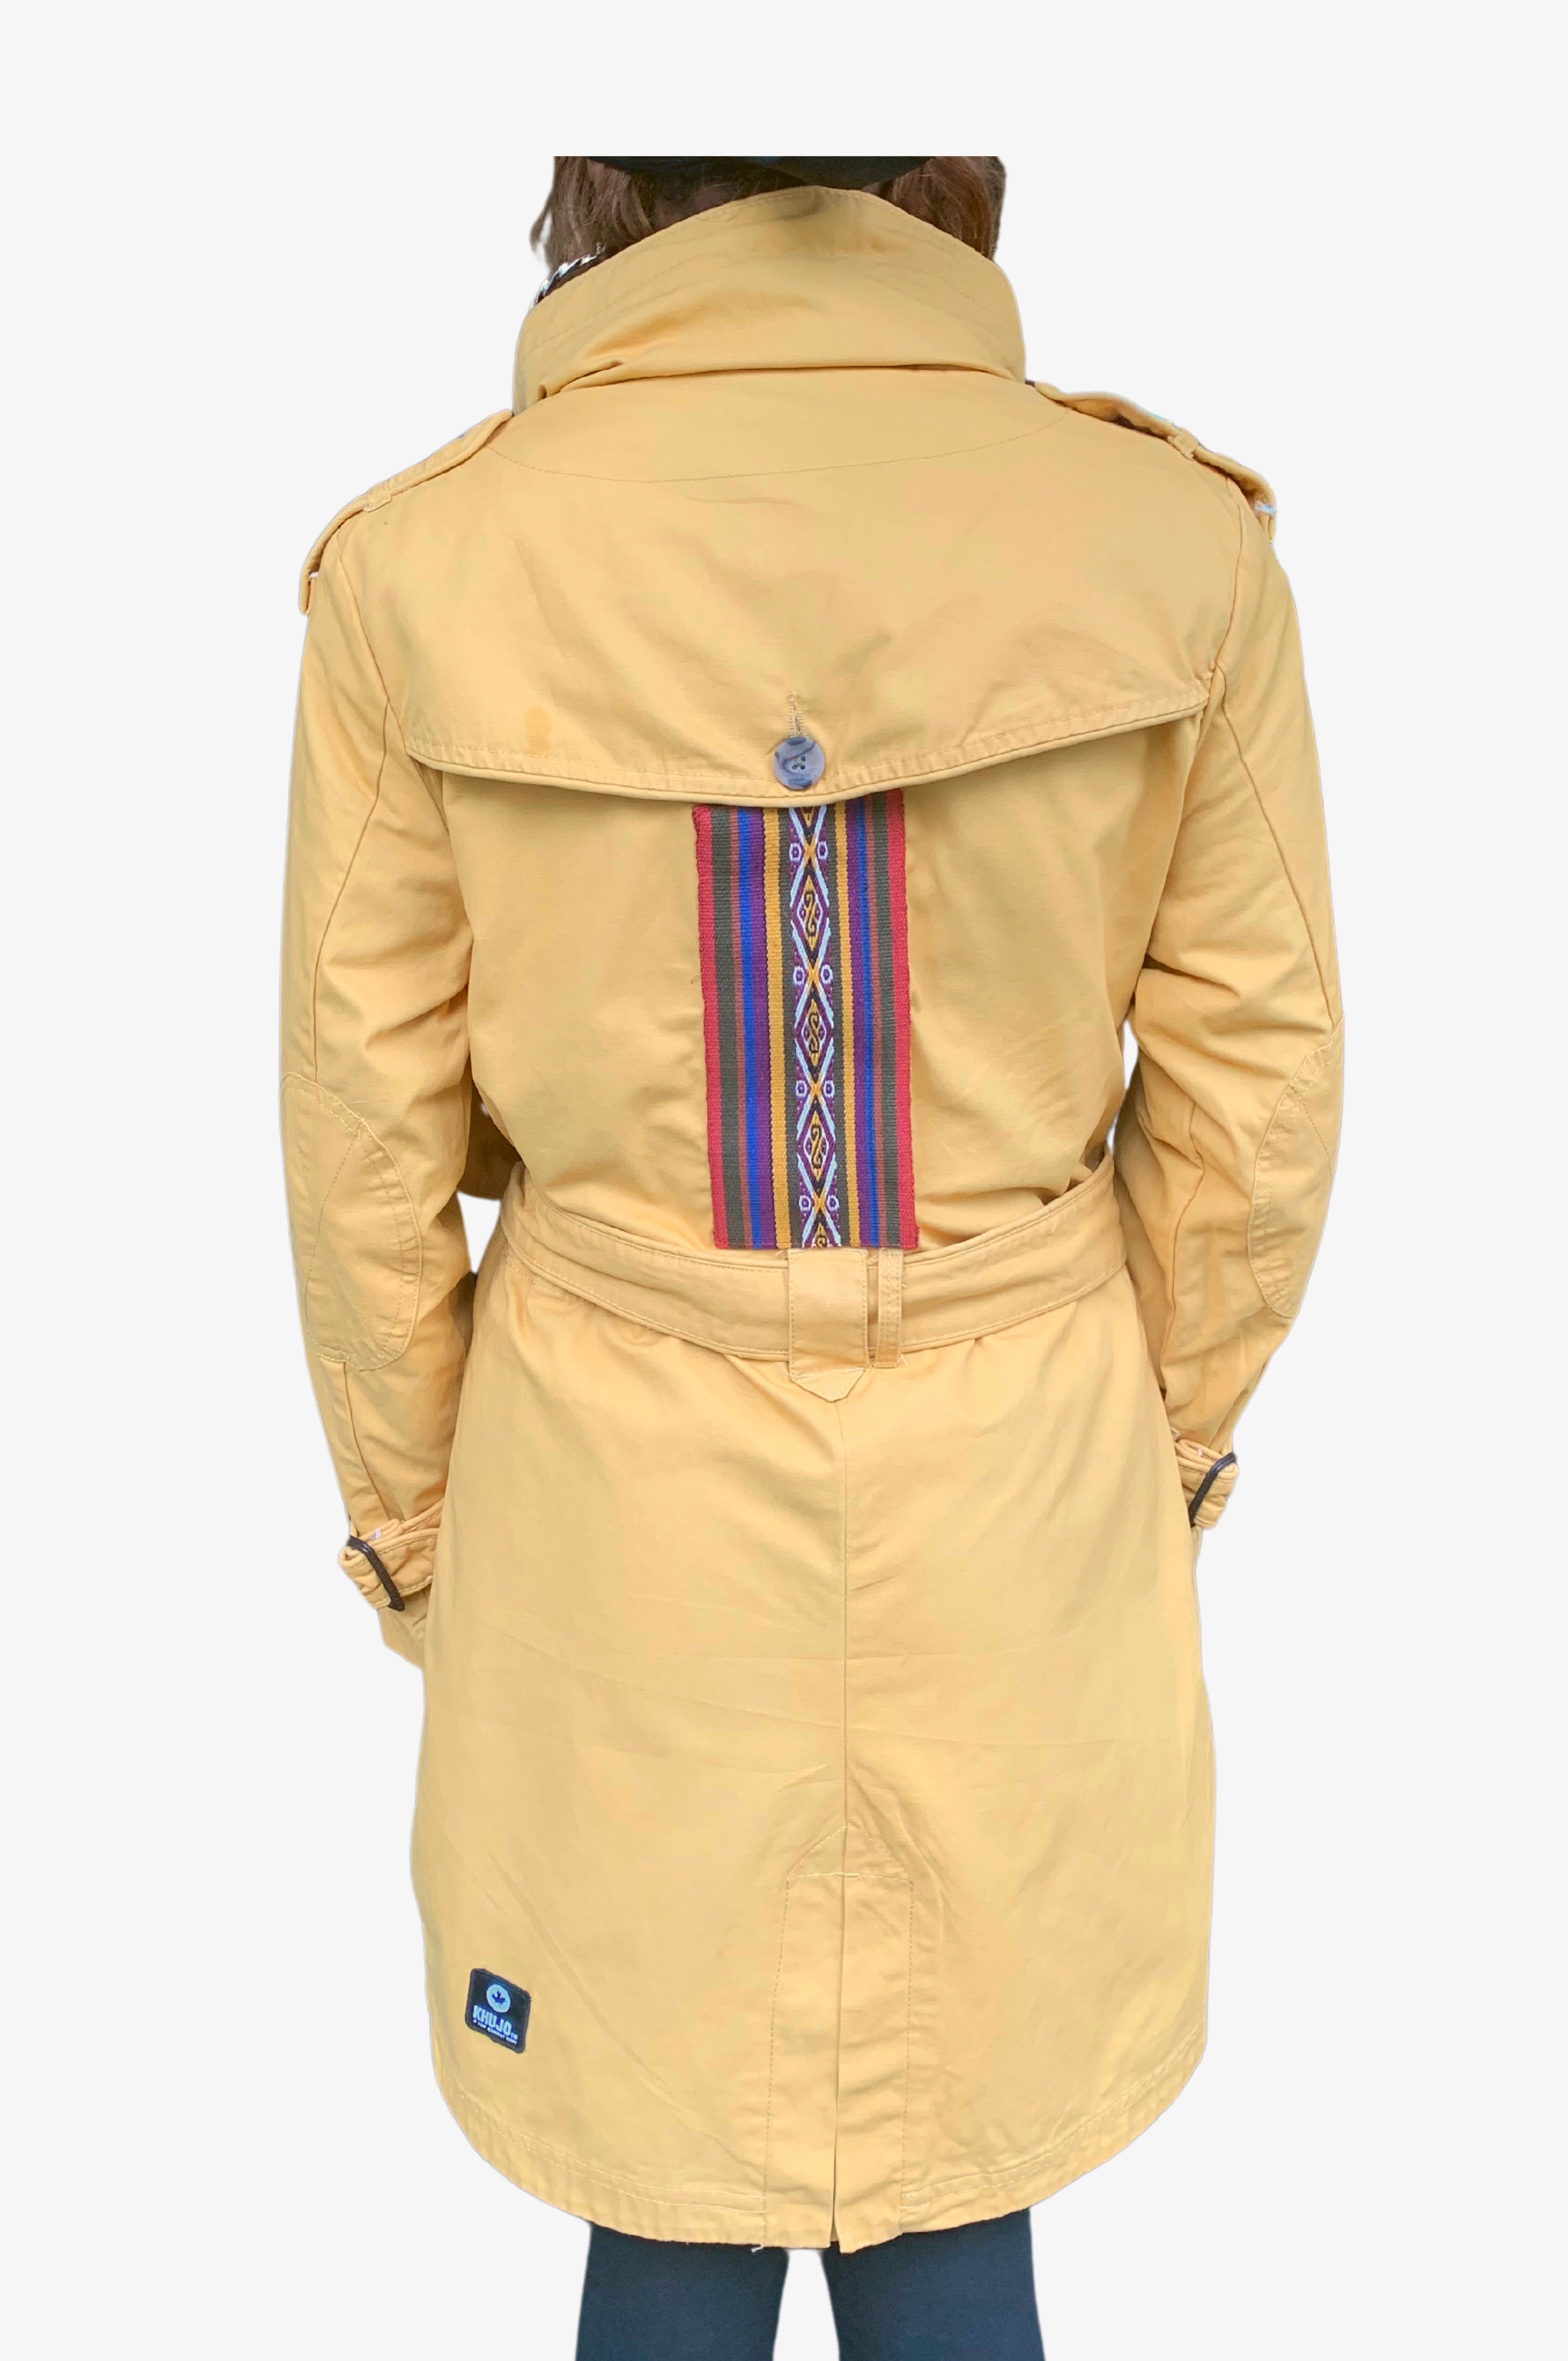 Upcycled mustard parka jacket